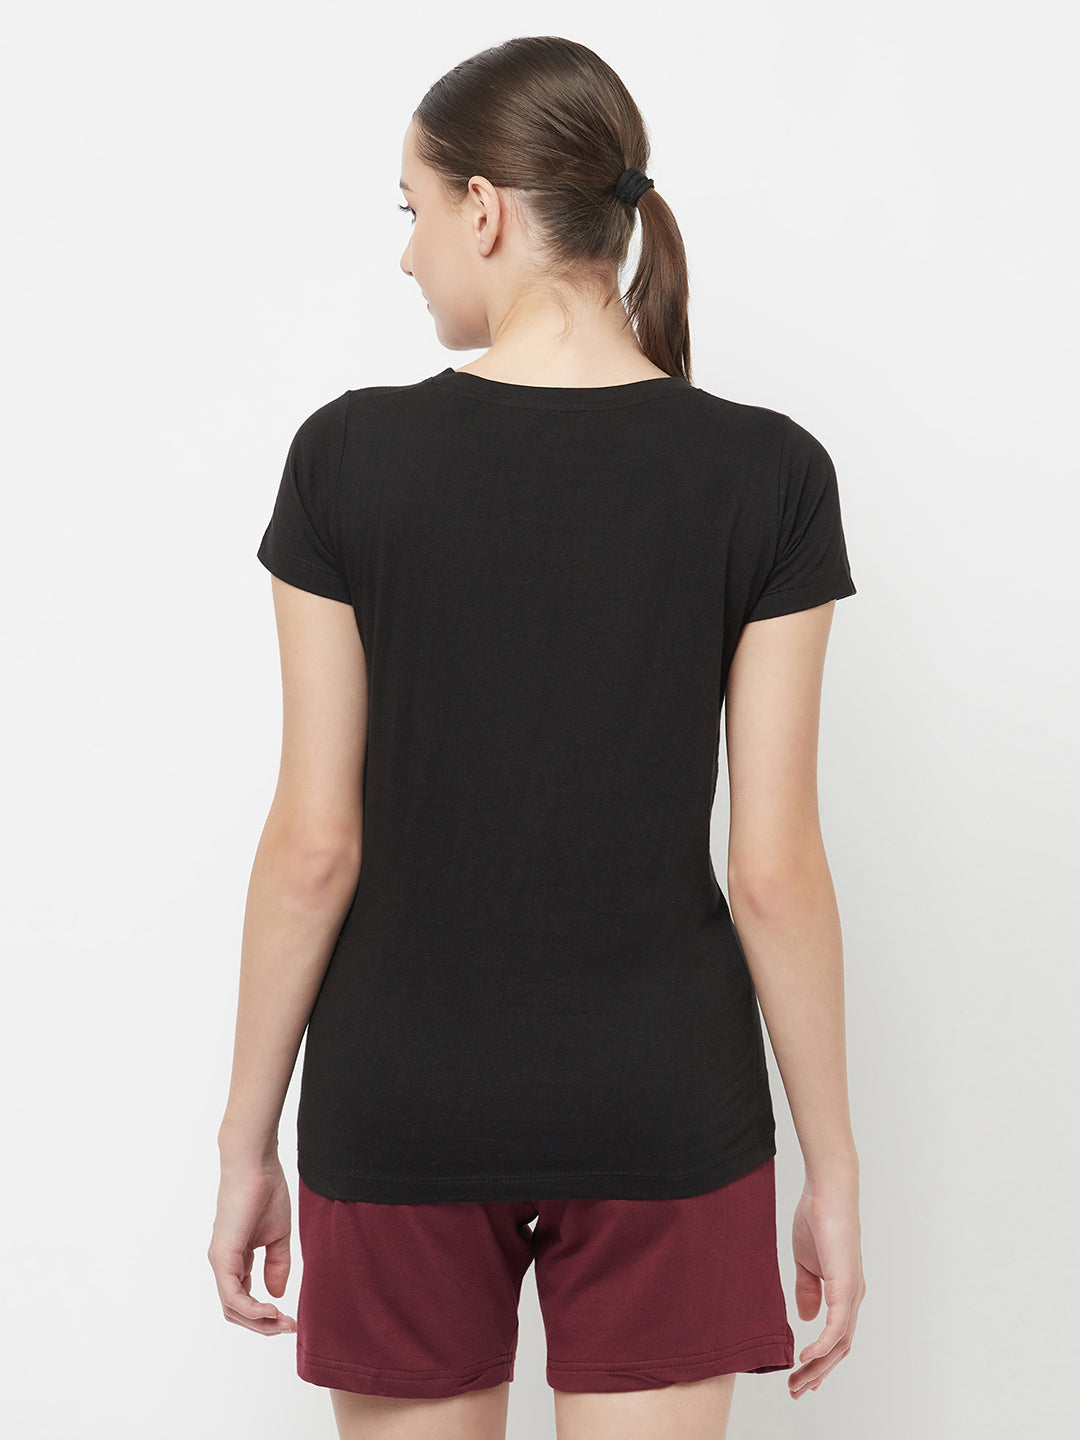 Slim Fit Premium Cotton Tshirts (Pack of 2- Black, Pink)